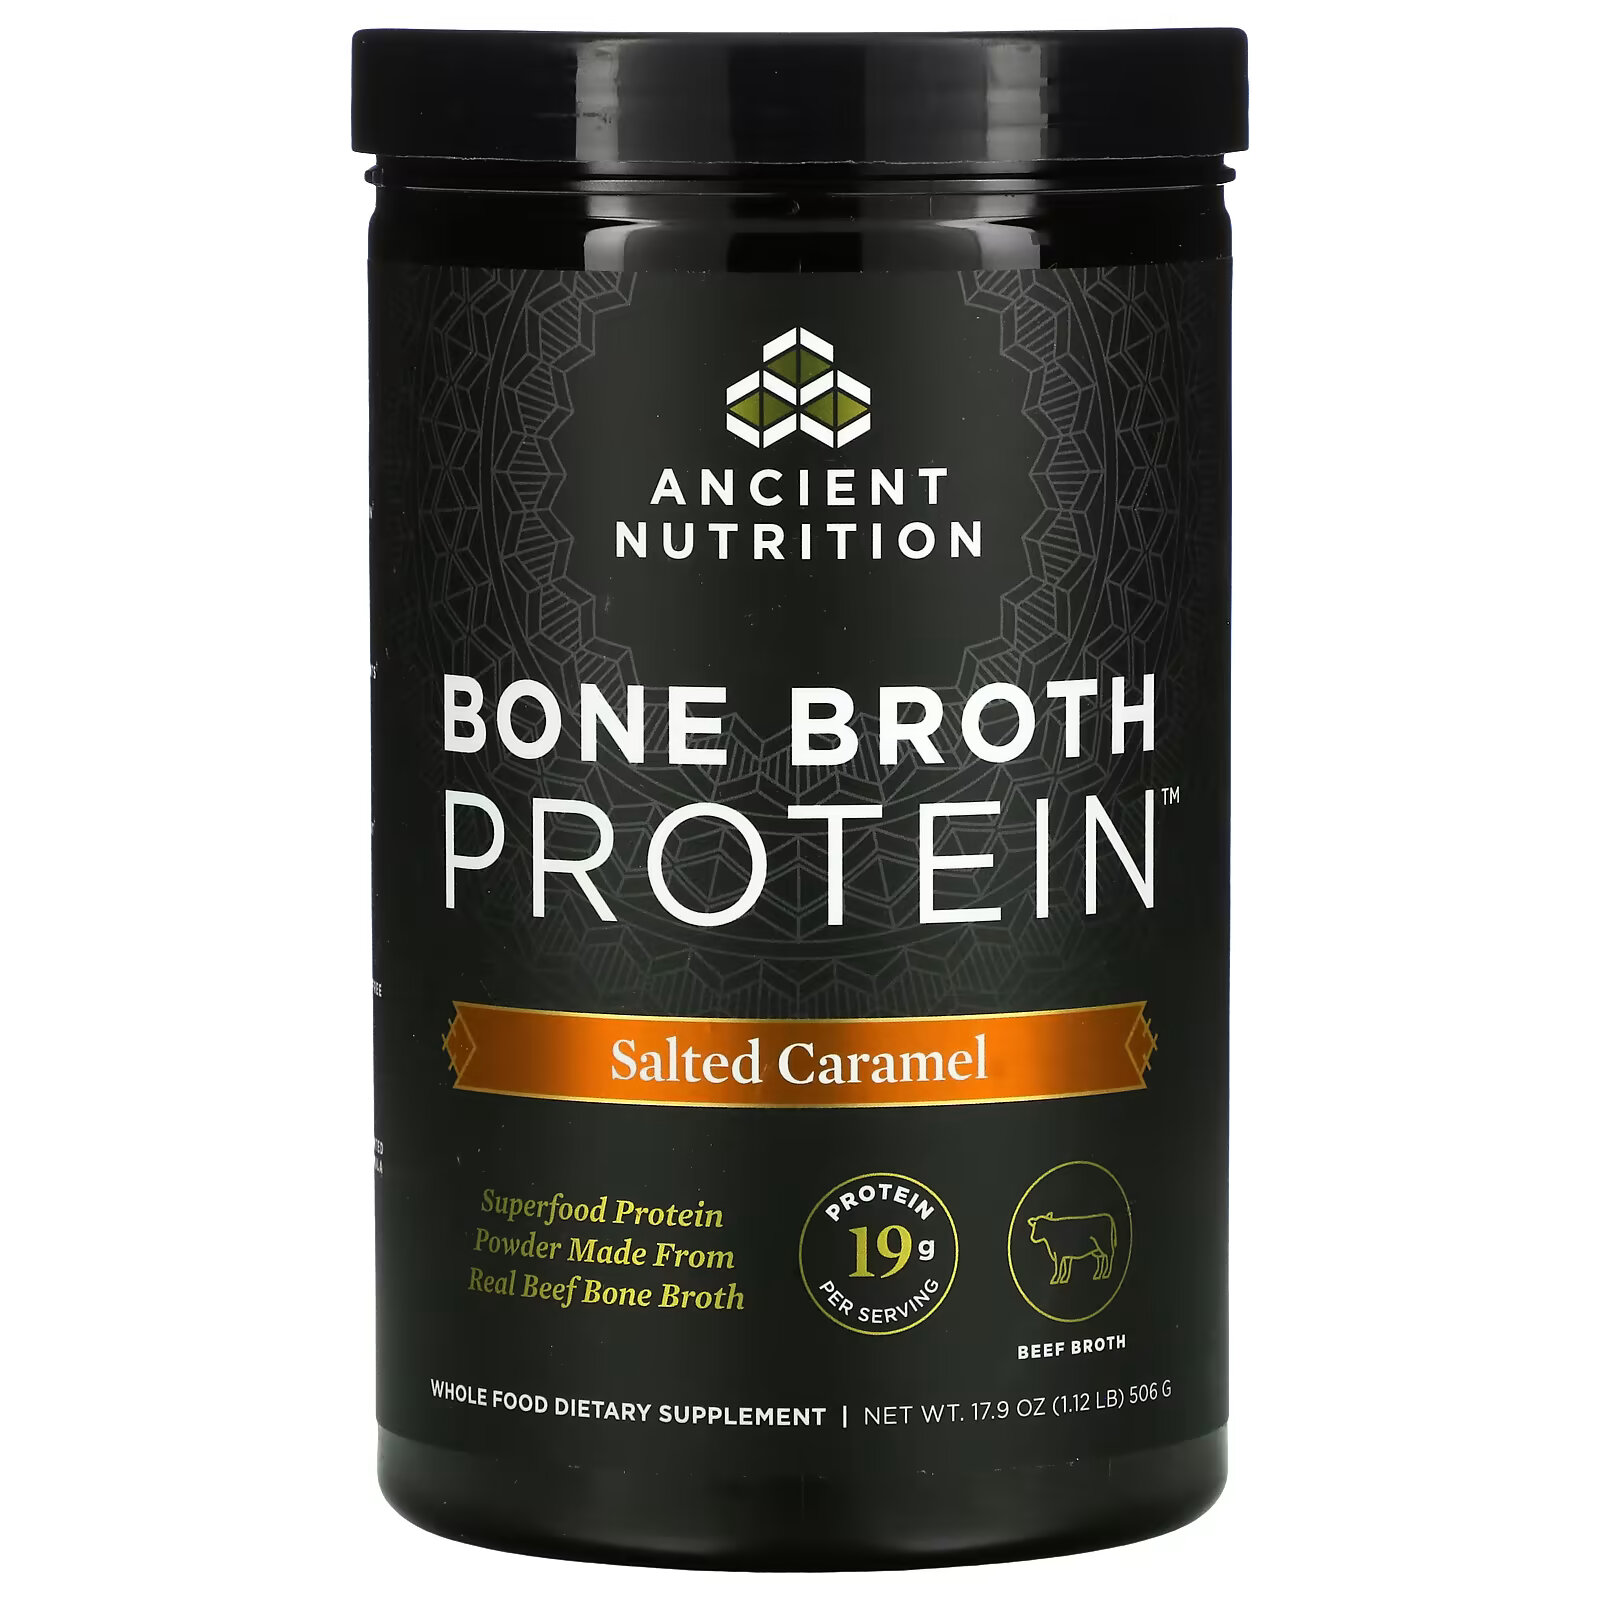 dr axe ancient nutrition bone broth protein чистый белок 890 г 1 96 фунта Dr. Axe / Ancient Nutrition, Bone Broth Protein, соленая карамель, 506 г (1,12 фунта)